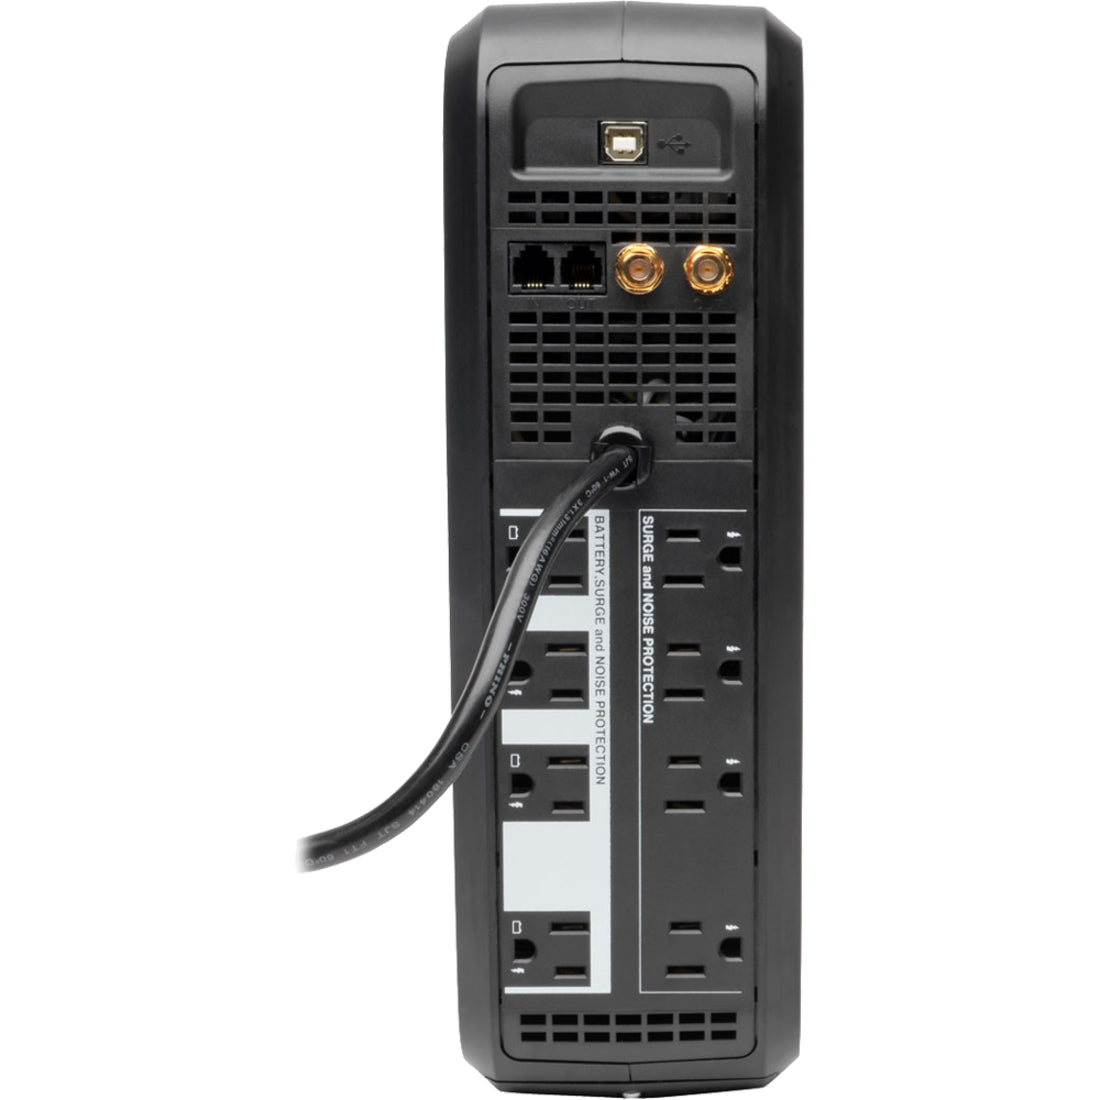 Tripp Lite SMART1000LCD 智能Pro 1000 VA 塔式数码UPS，8插座，黑色 Tripp Lite 牌名为普利 Tripp。品牌名译为“普利”。